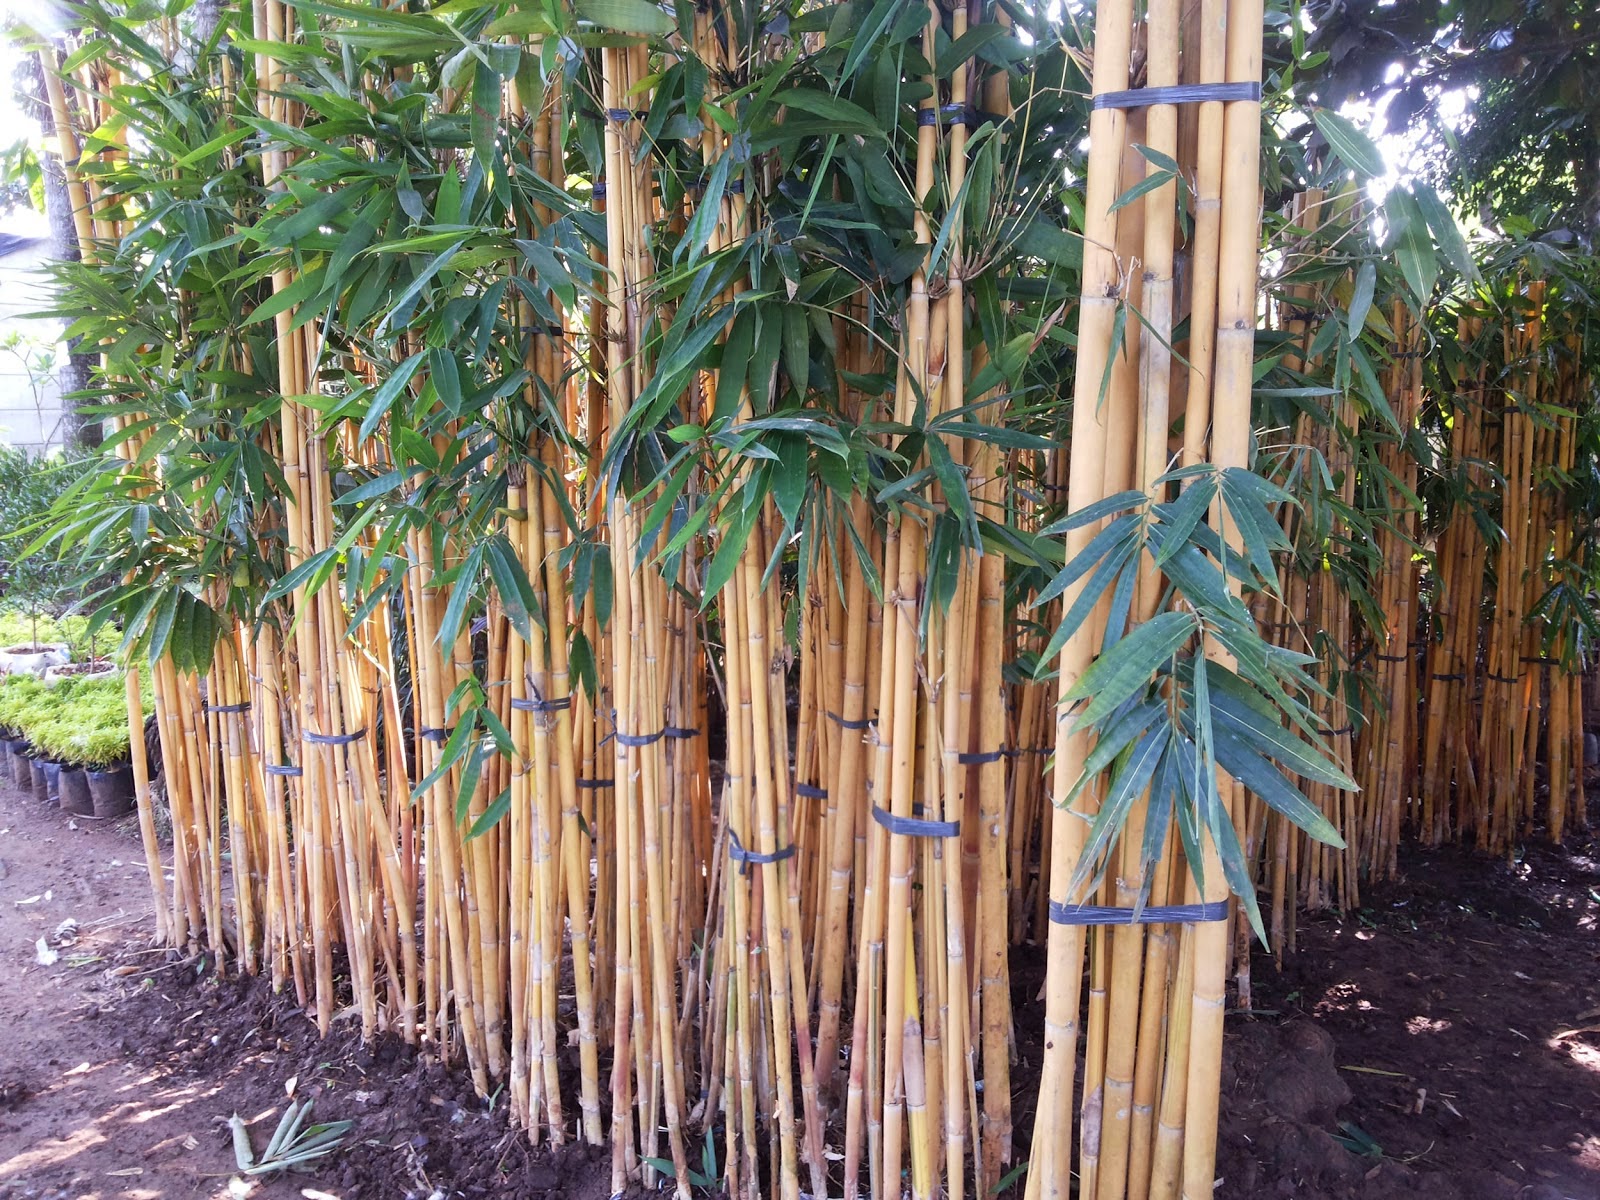 Jual Pohon Bambu  Kuning Murah  Supplier Pohon Bambu  Panda 